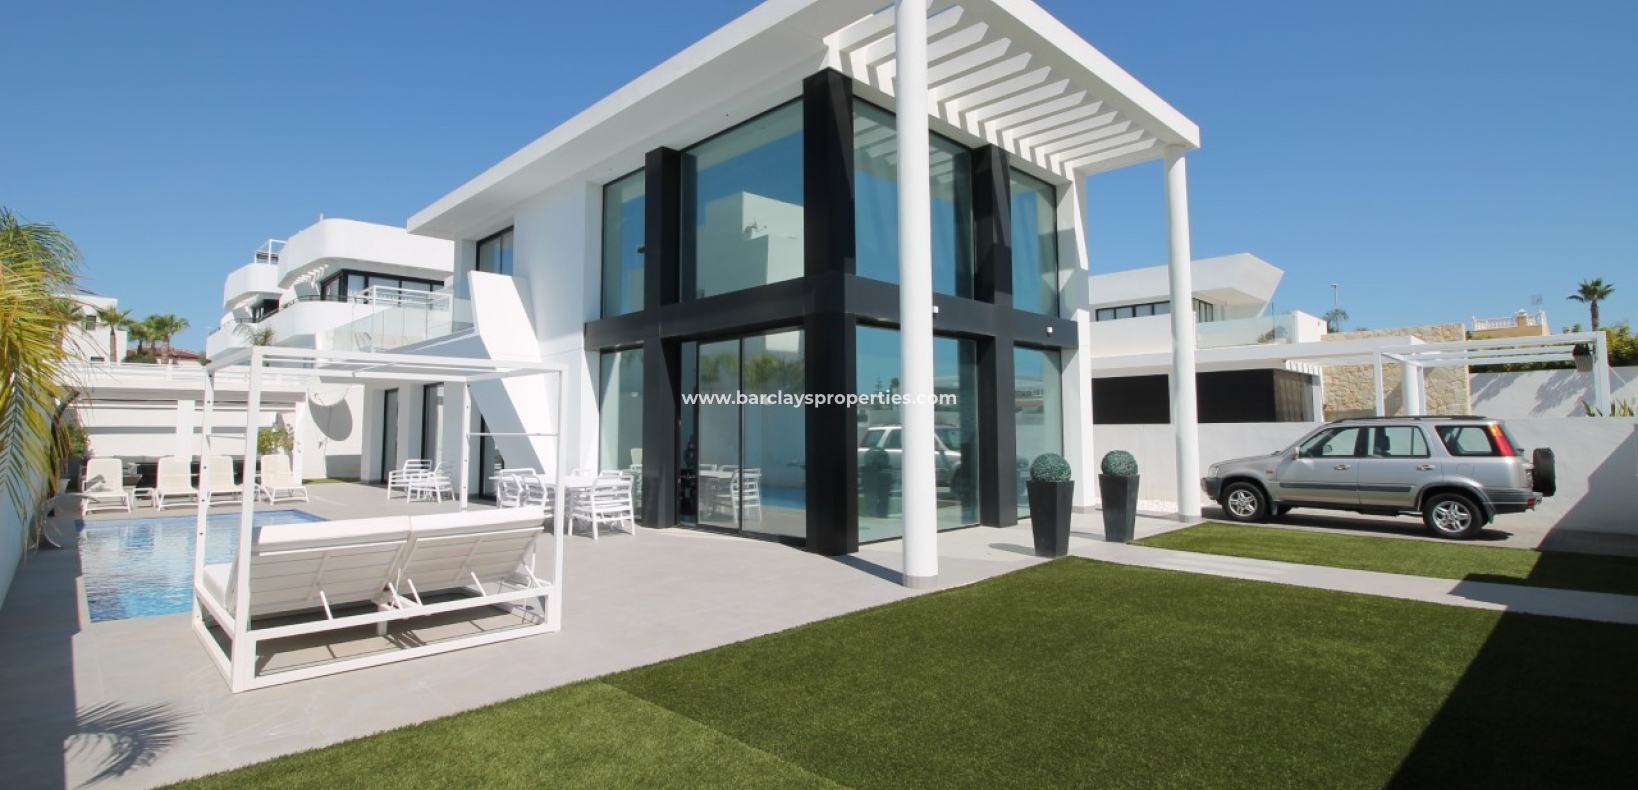 Jardin - Villa moderne à vendre dans l'urbanisation La Marina